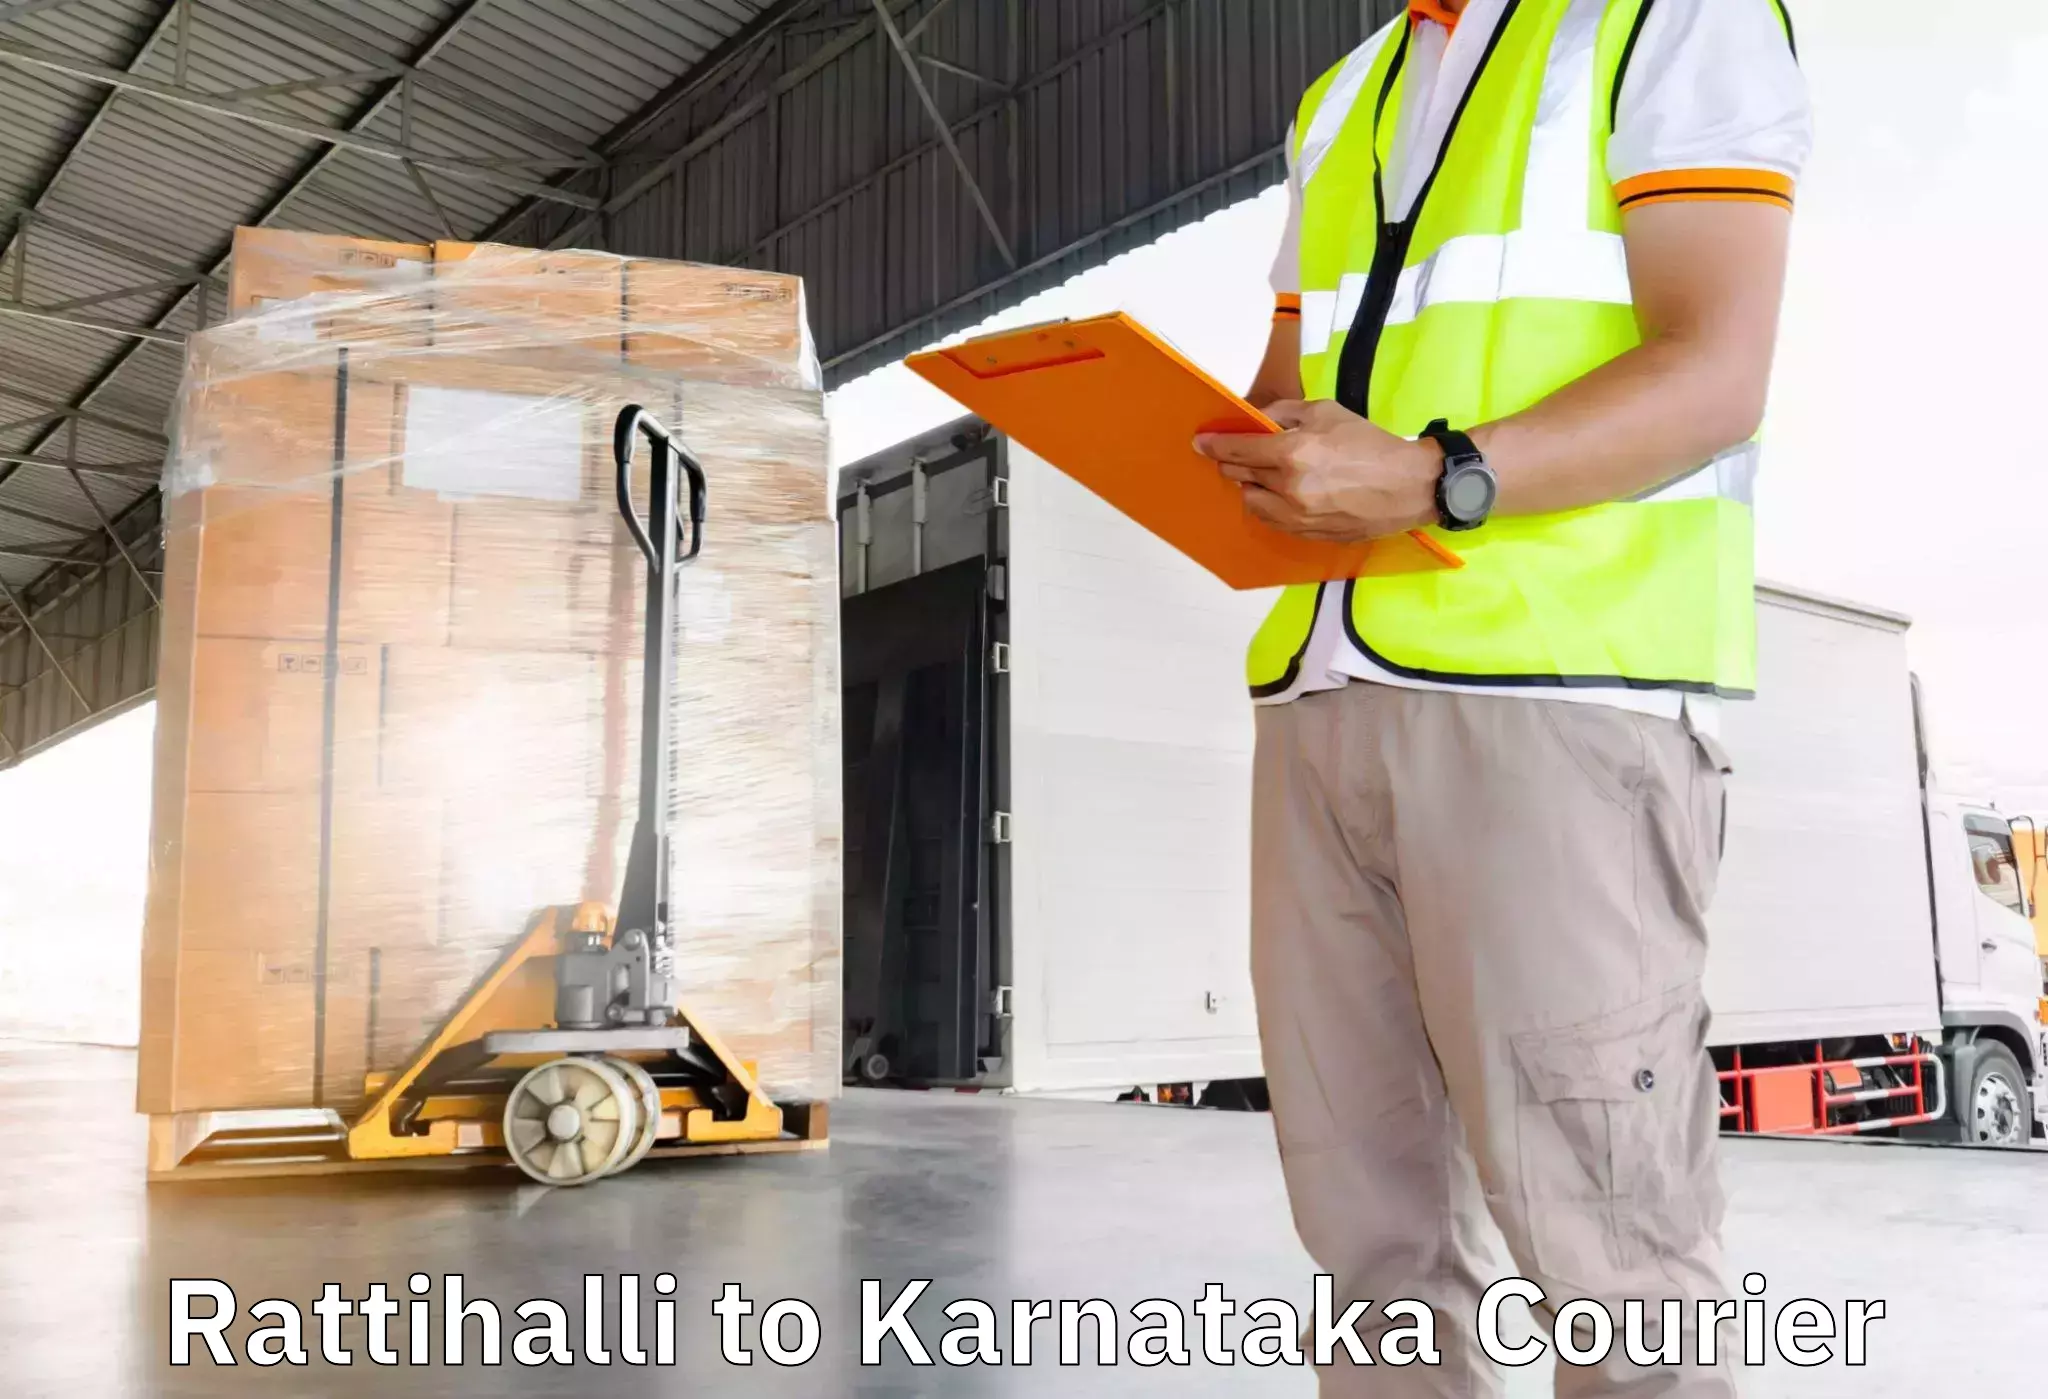 Furniture moving plans Rattihalli to Karnataka